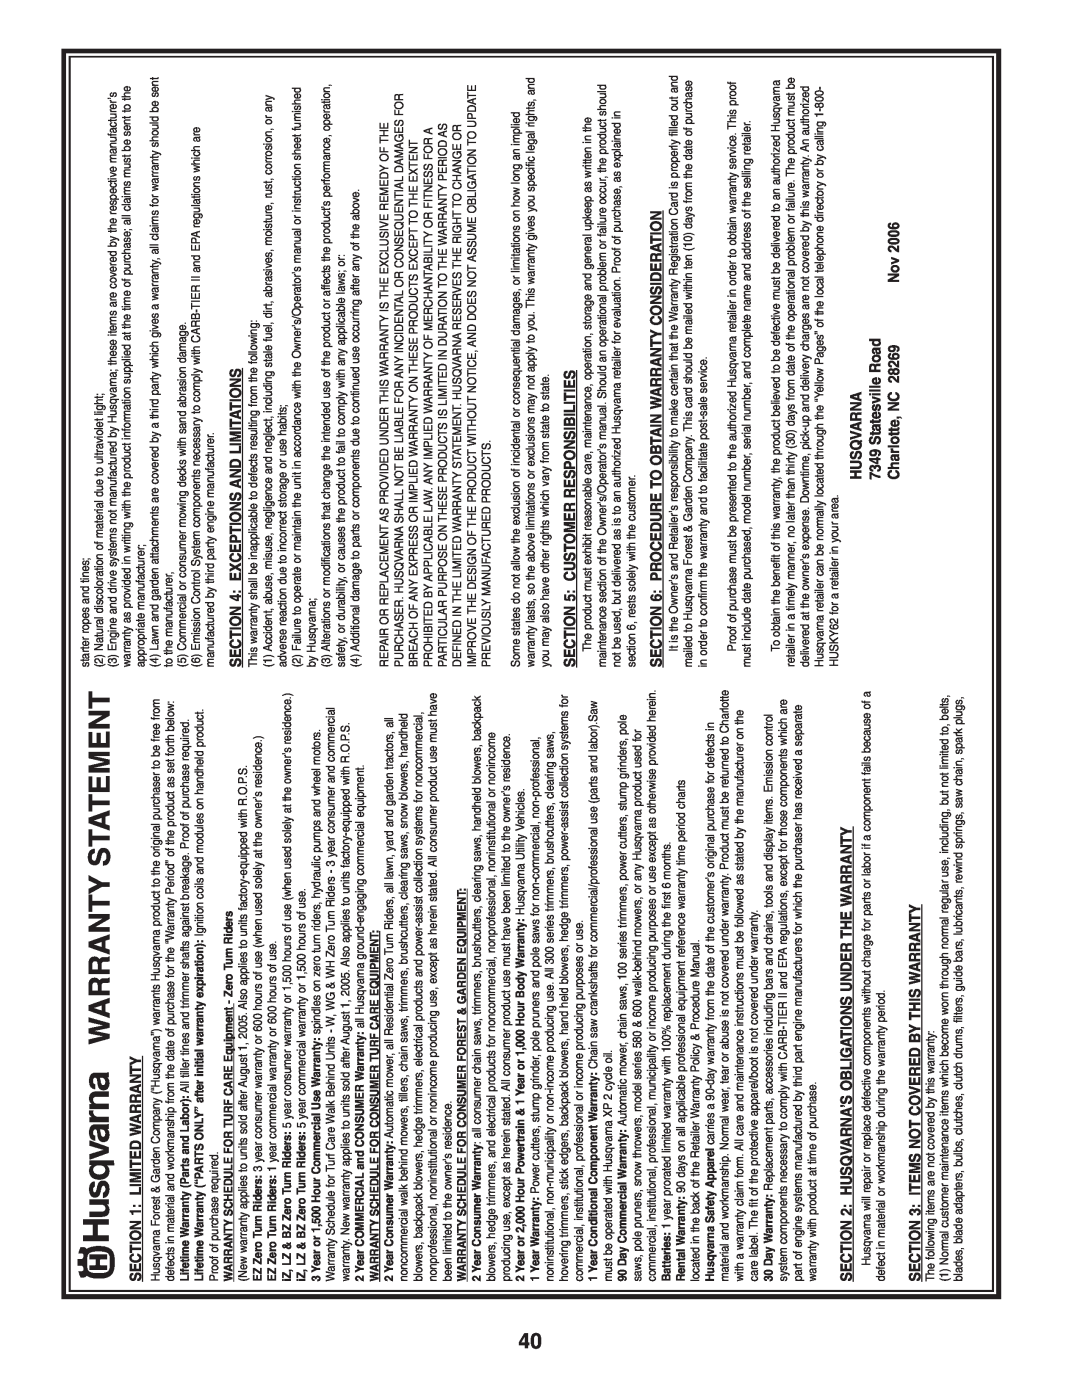 Husqvarna 87521HVE Warranty Statement, Charlotte, NC, WARRANTY SCHEDULE FOR TURF CARE Equipment - Zero Turn Riders 